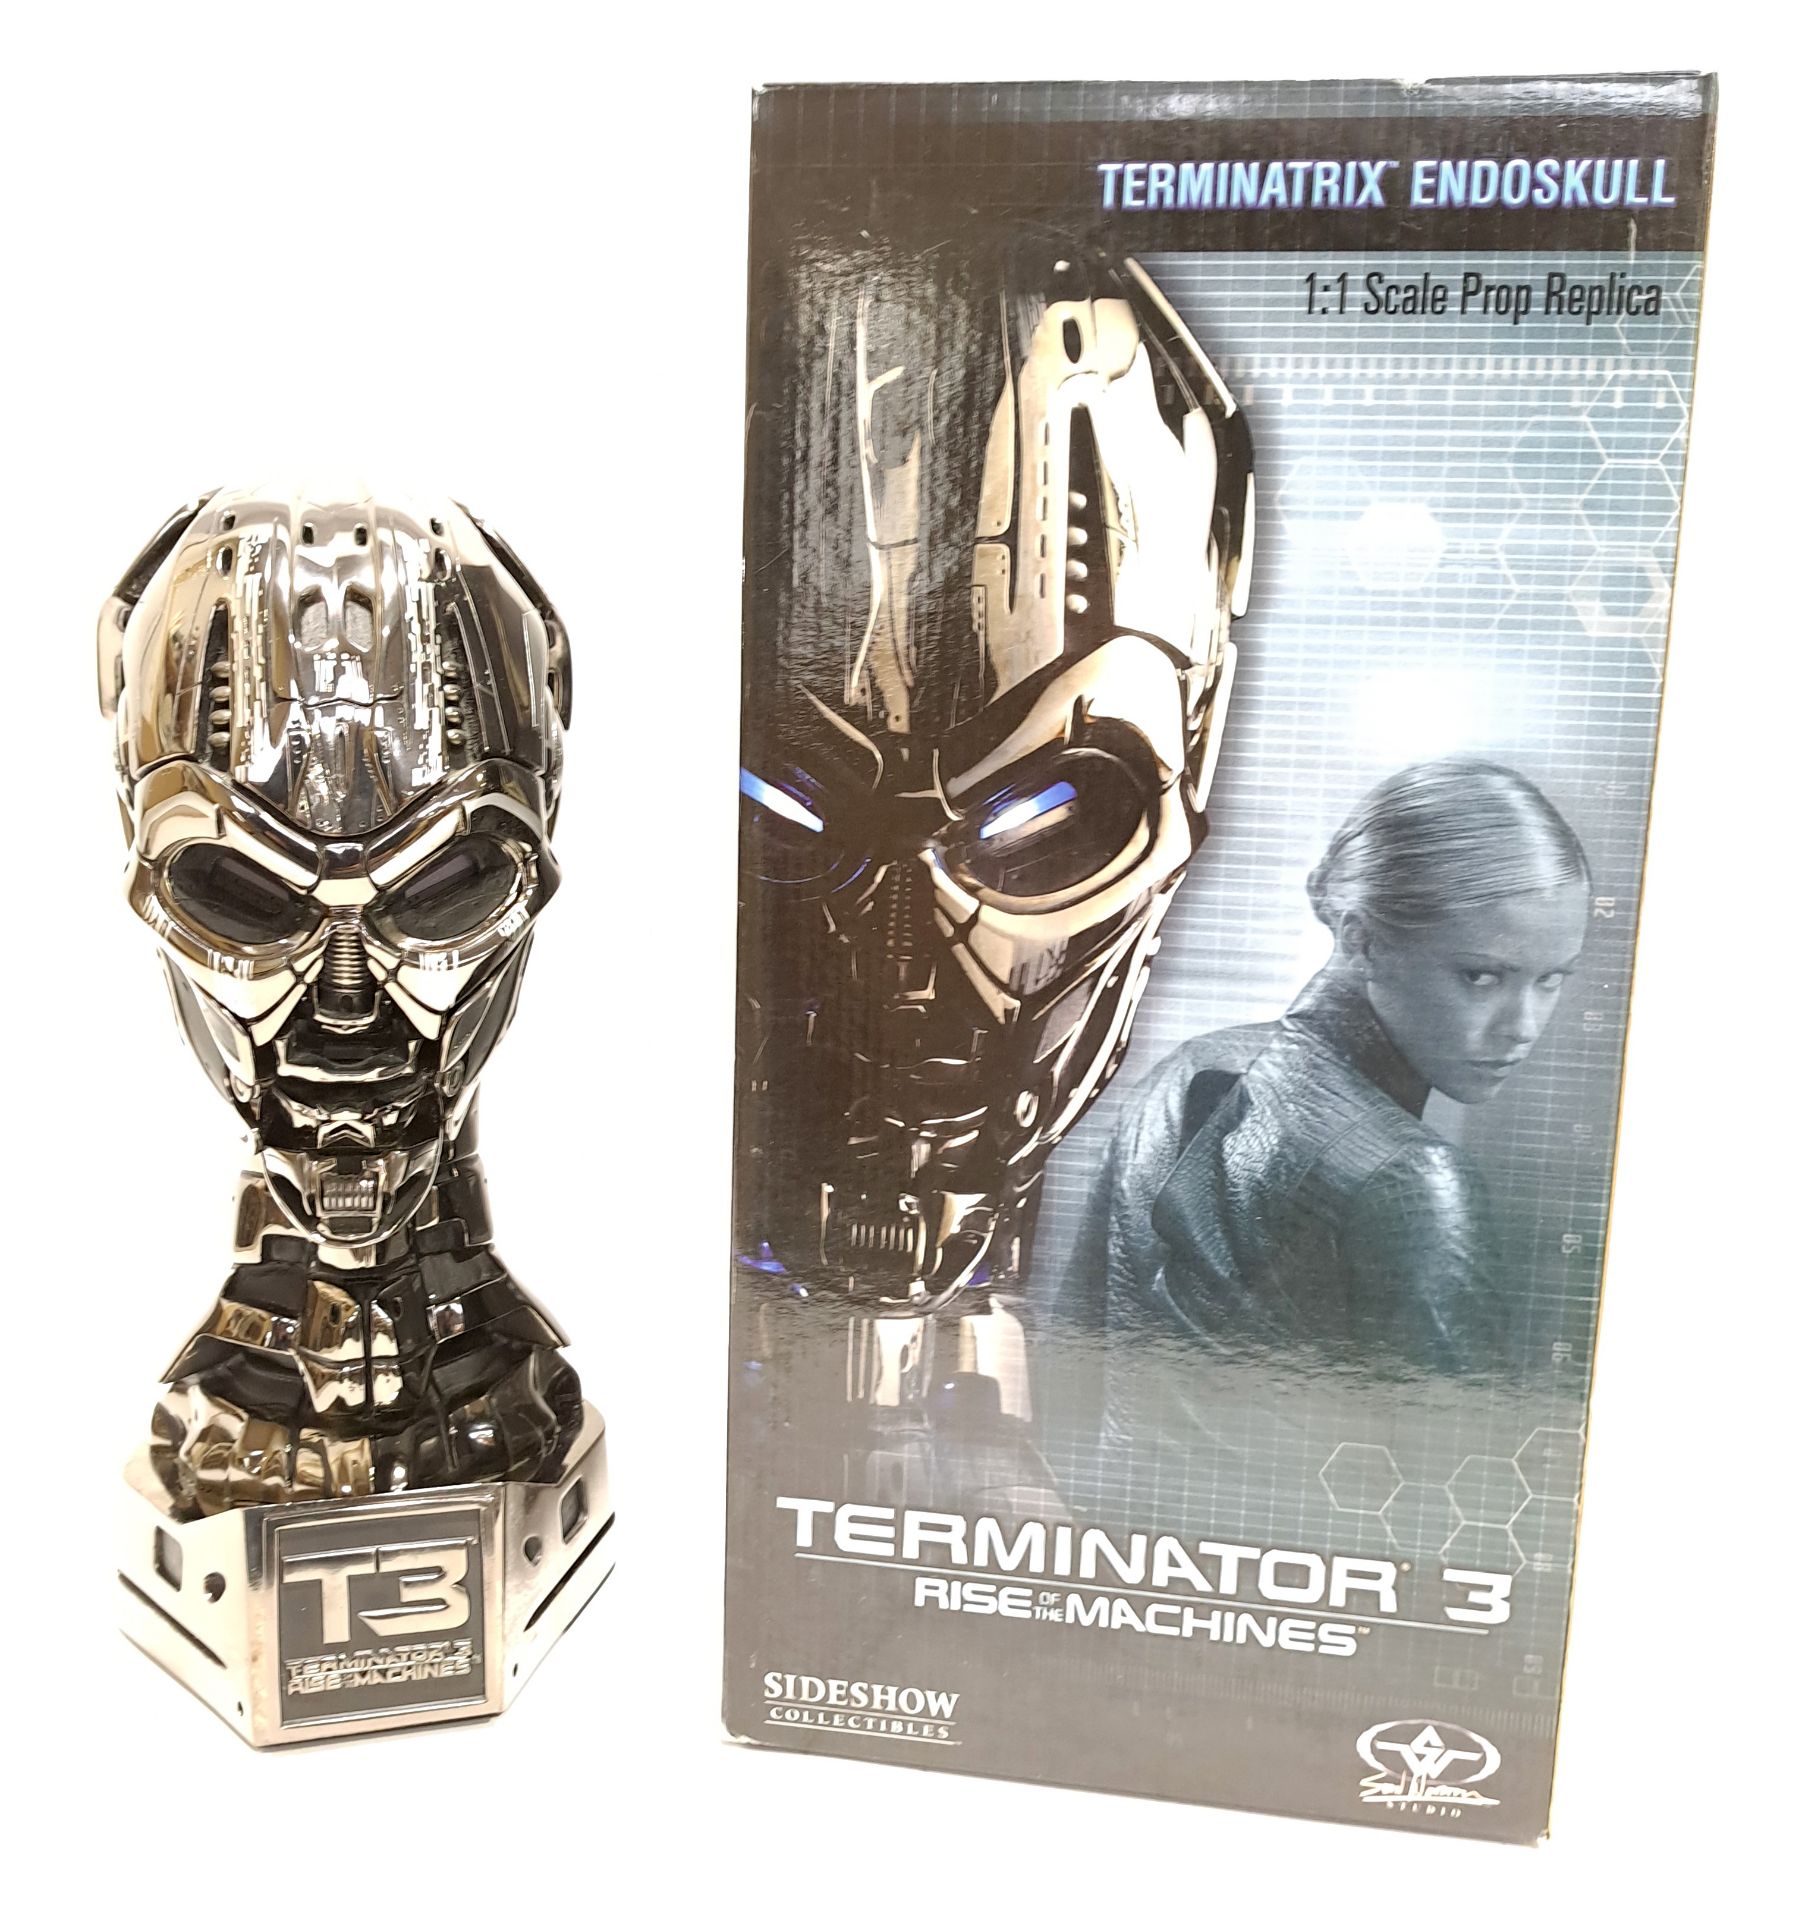 Sideshow Collectibles Terminator 3 Rise of the Machines Terminatrix Endoskull 1:1 Scale Prop Replica